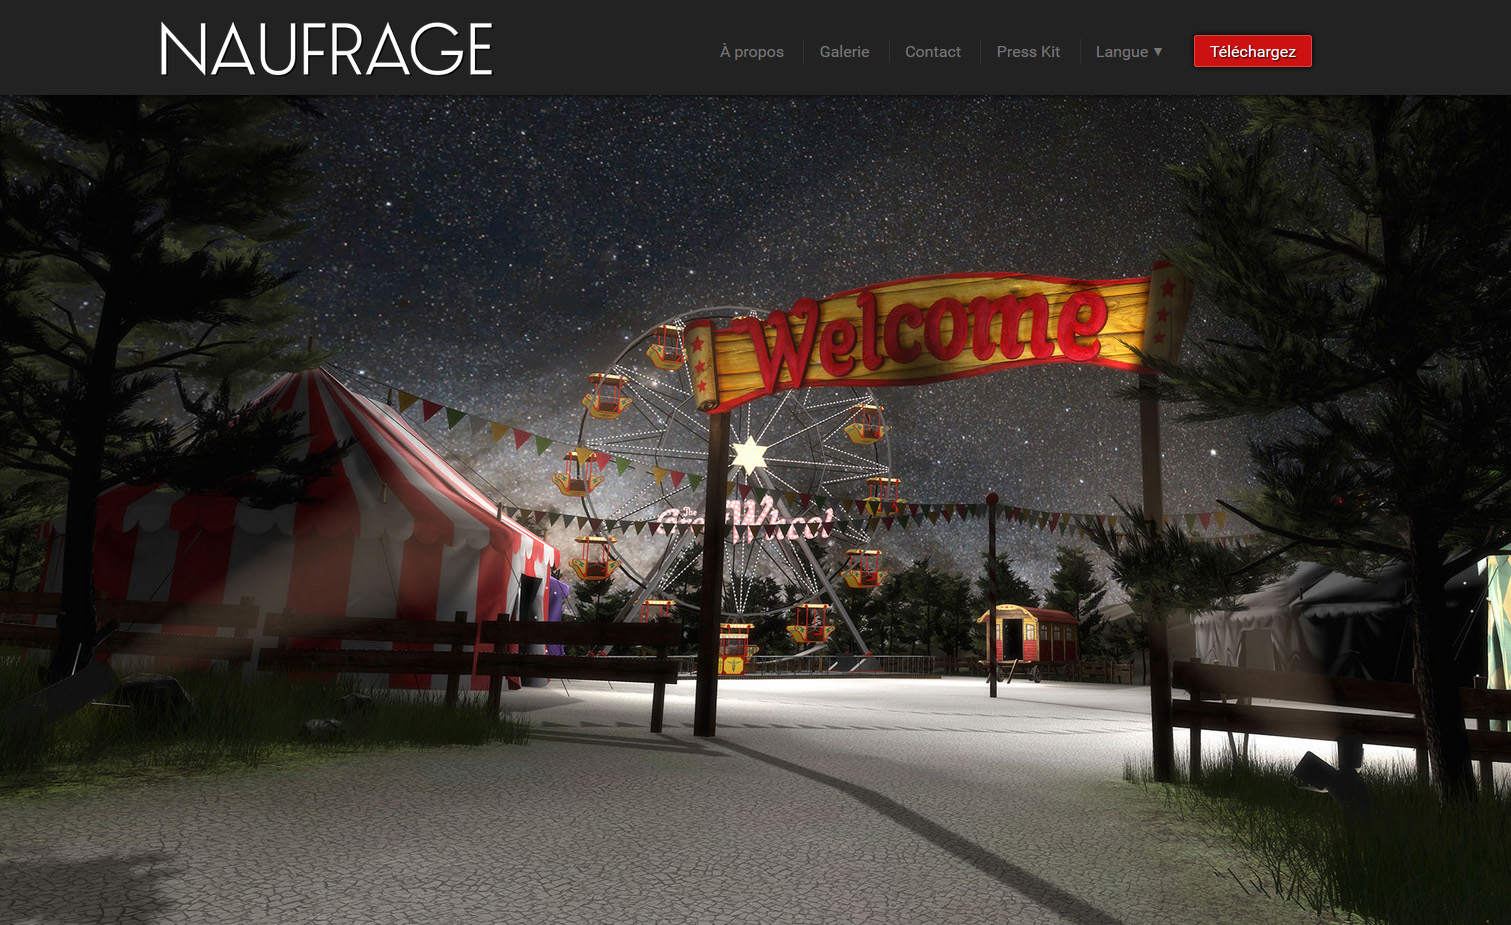 Naufrage website screenshot